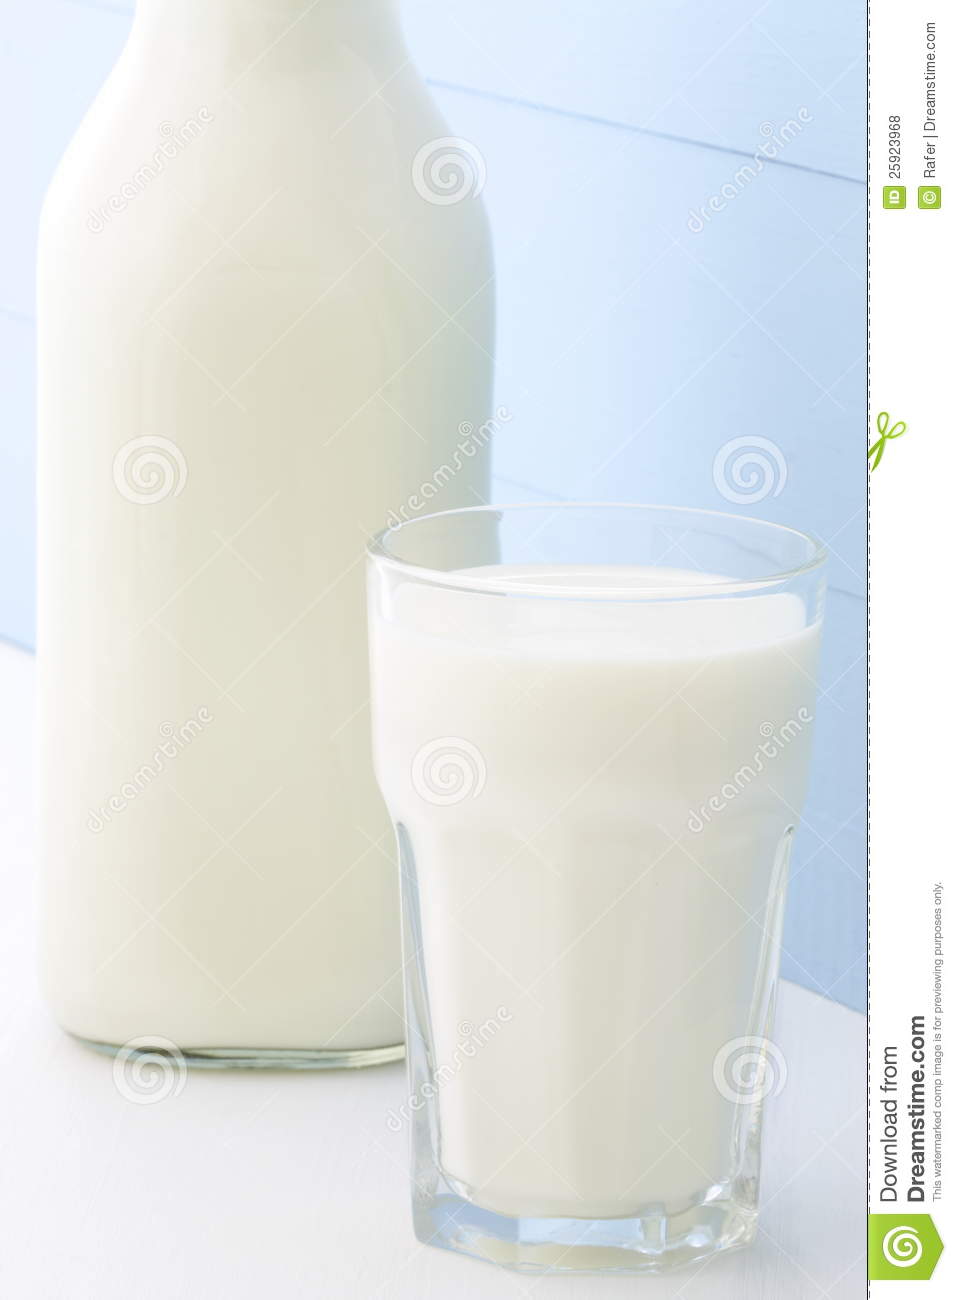 Quart Of Milk Clipart Images For Quart Of Milk Clipart Cool